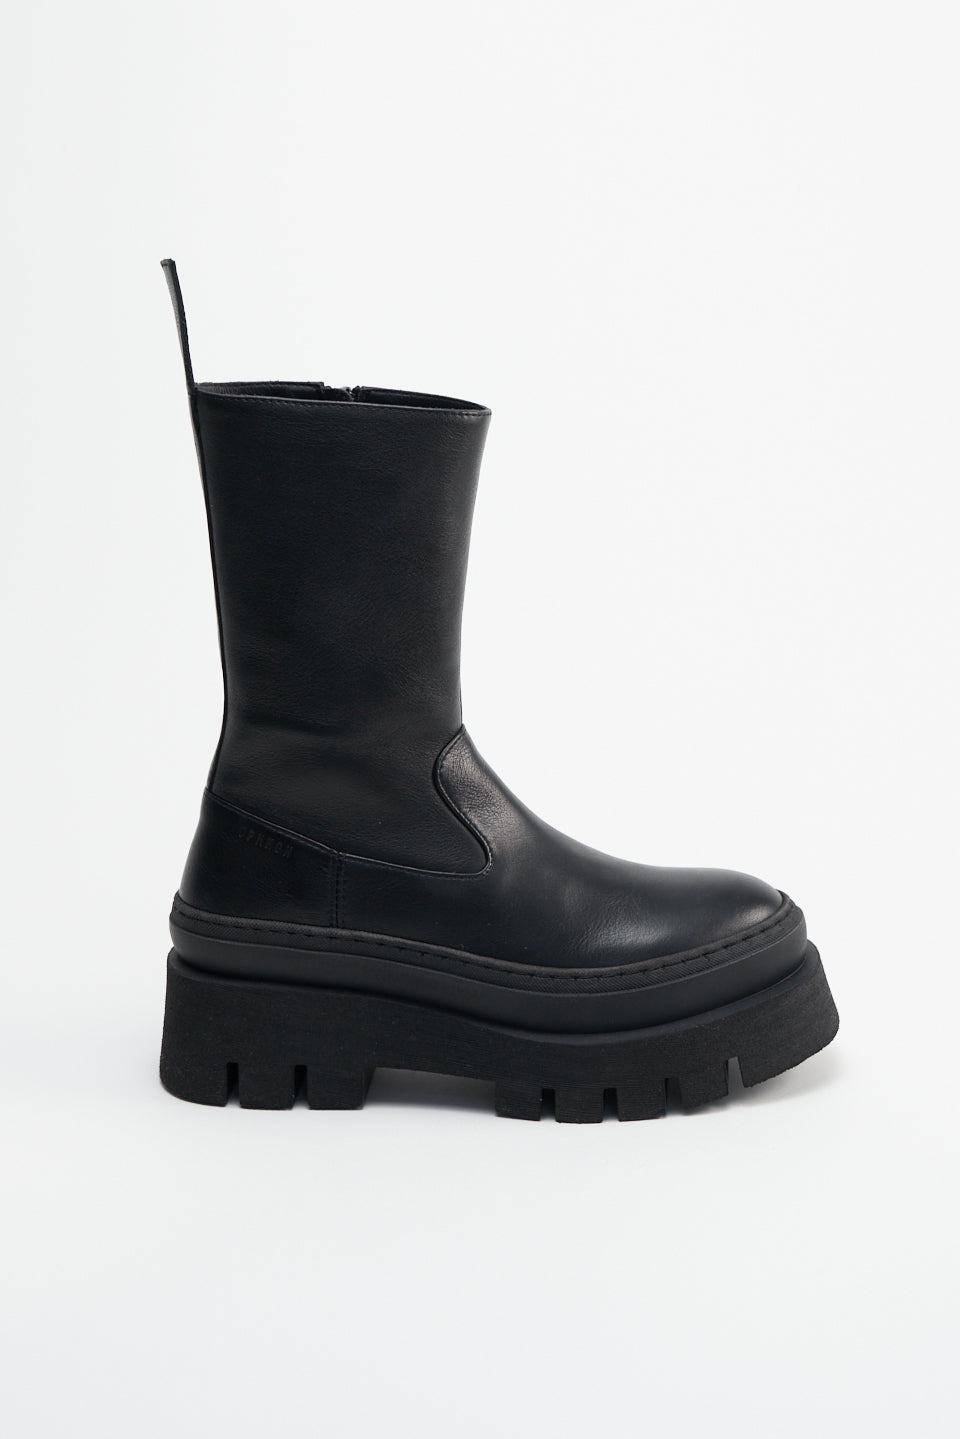 Vitello All Black Leather Boots CPH638_BLACK - 7